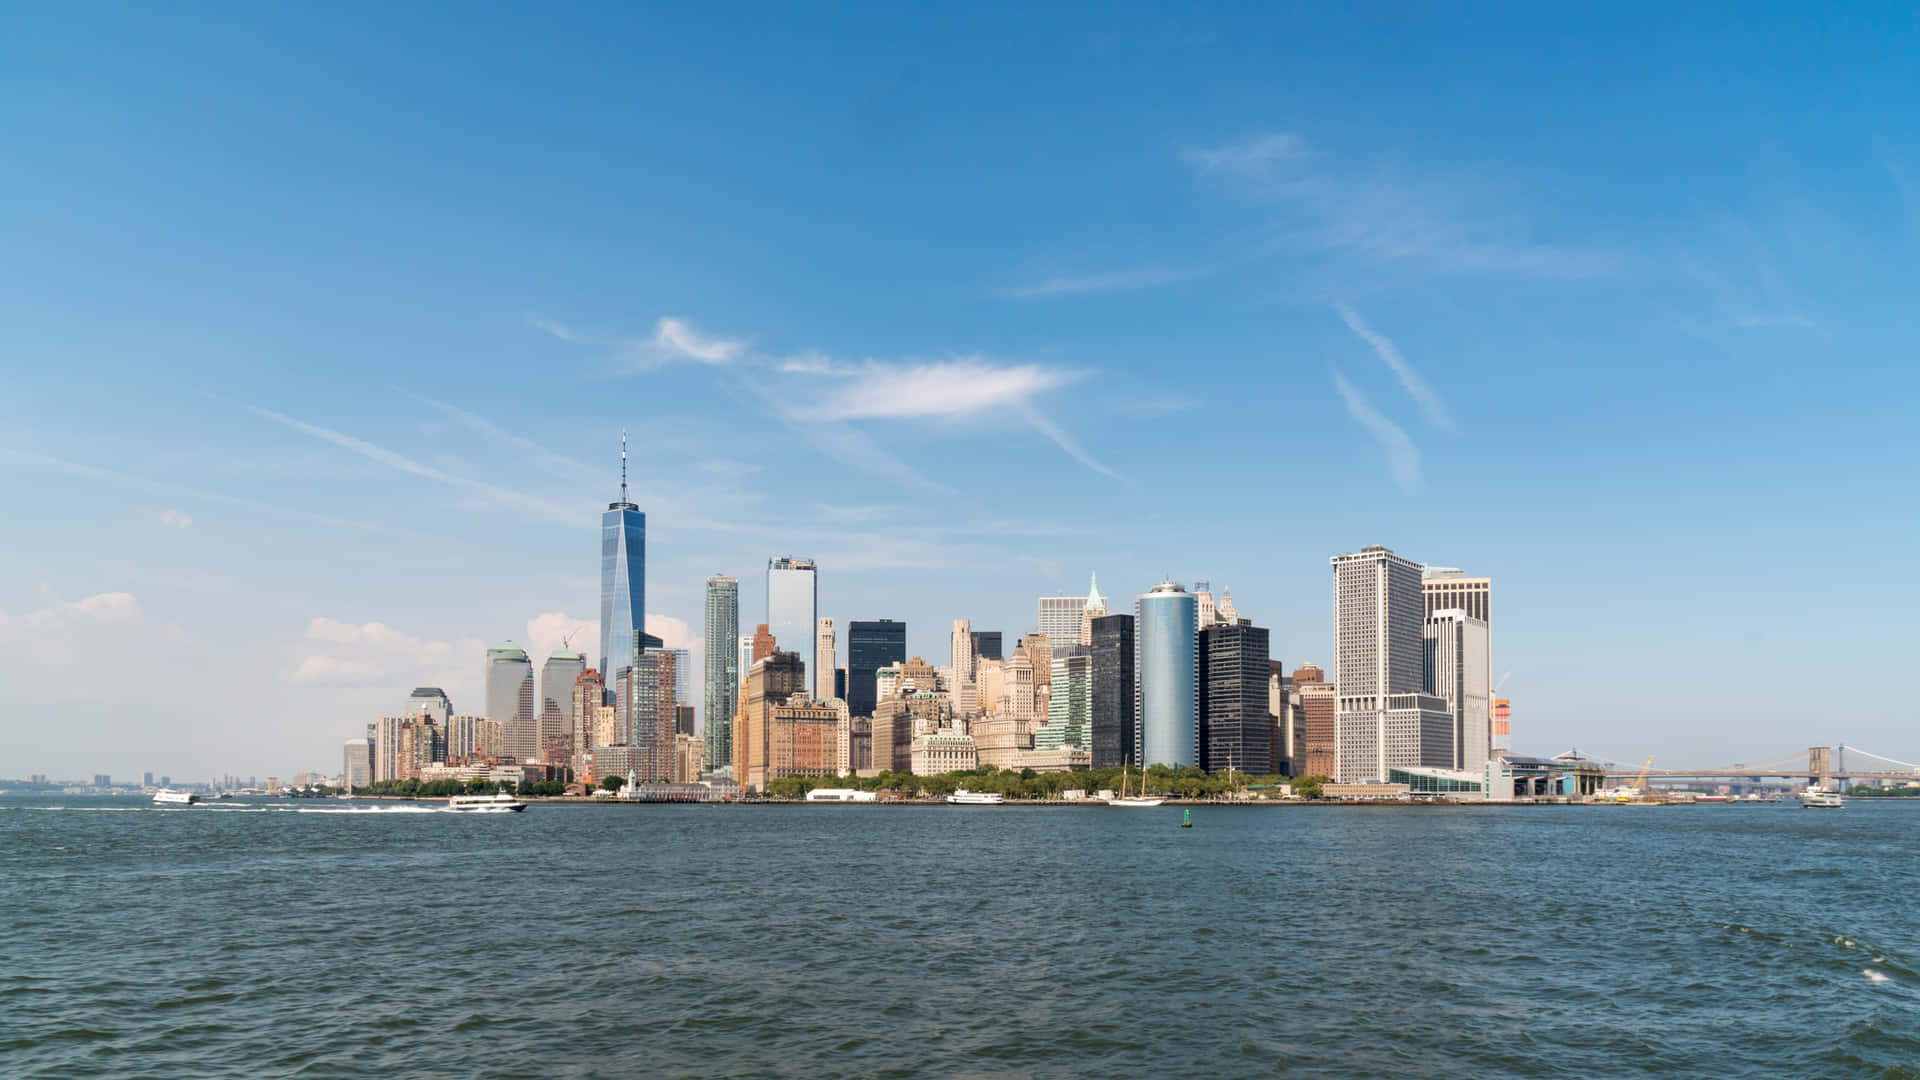 Iconic skyline of New York City, USA